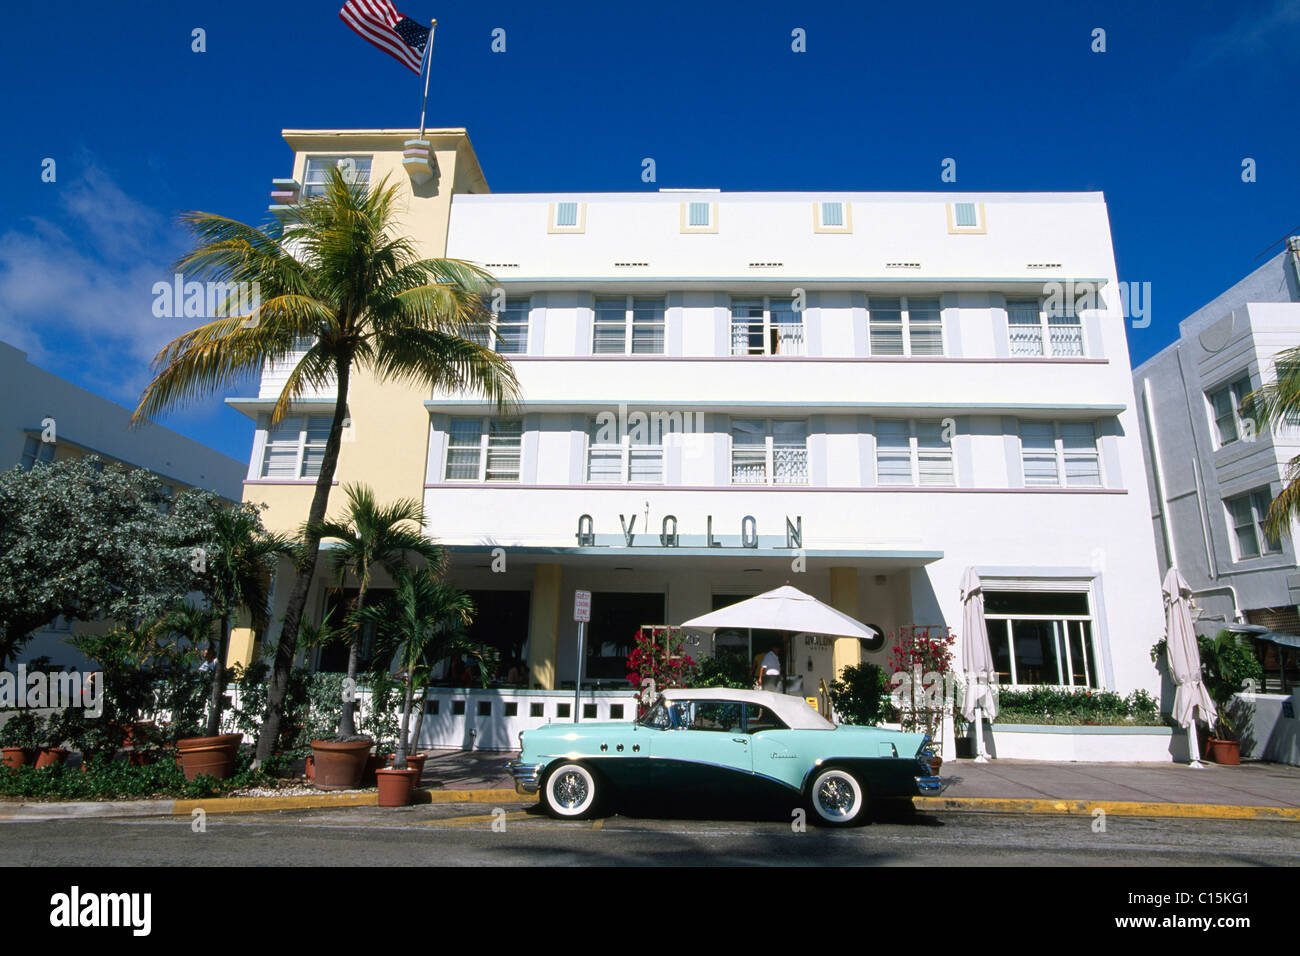 Vintage car parked in front of Ovolon, Ocean Drive, Miami Beach, Miami, Florida, USA Stock Photo